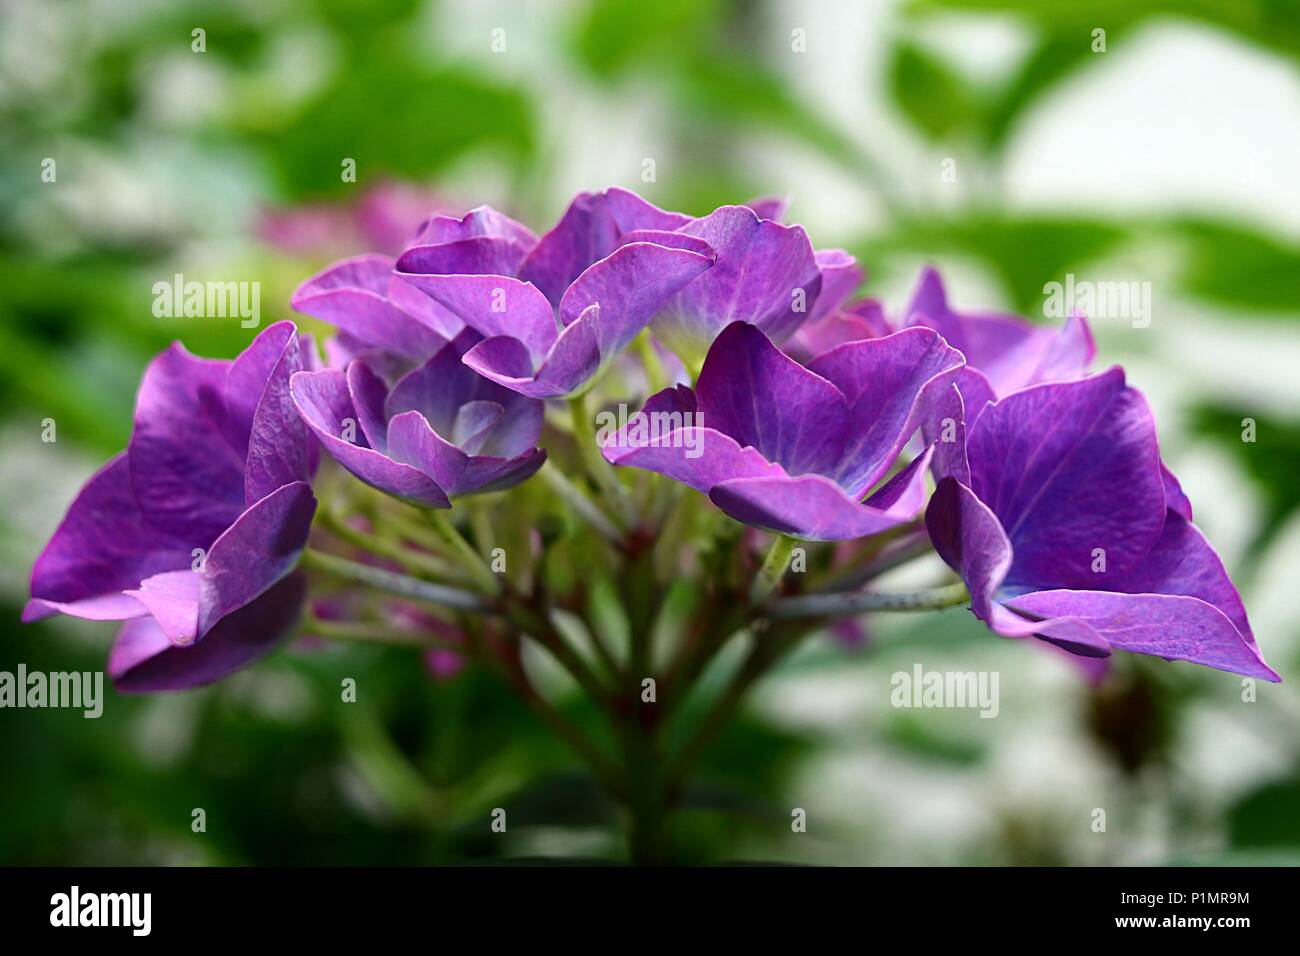 Multi colored hydrangea hortensia flower in close-up, purple bluish lilac colored ornamental flower Stock Photo